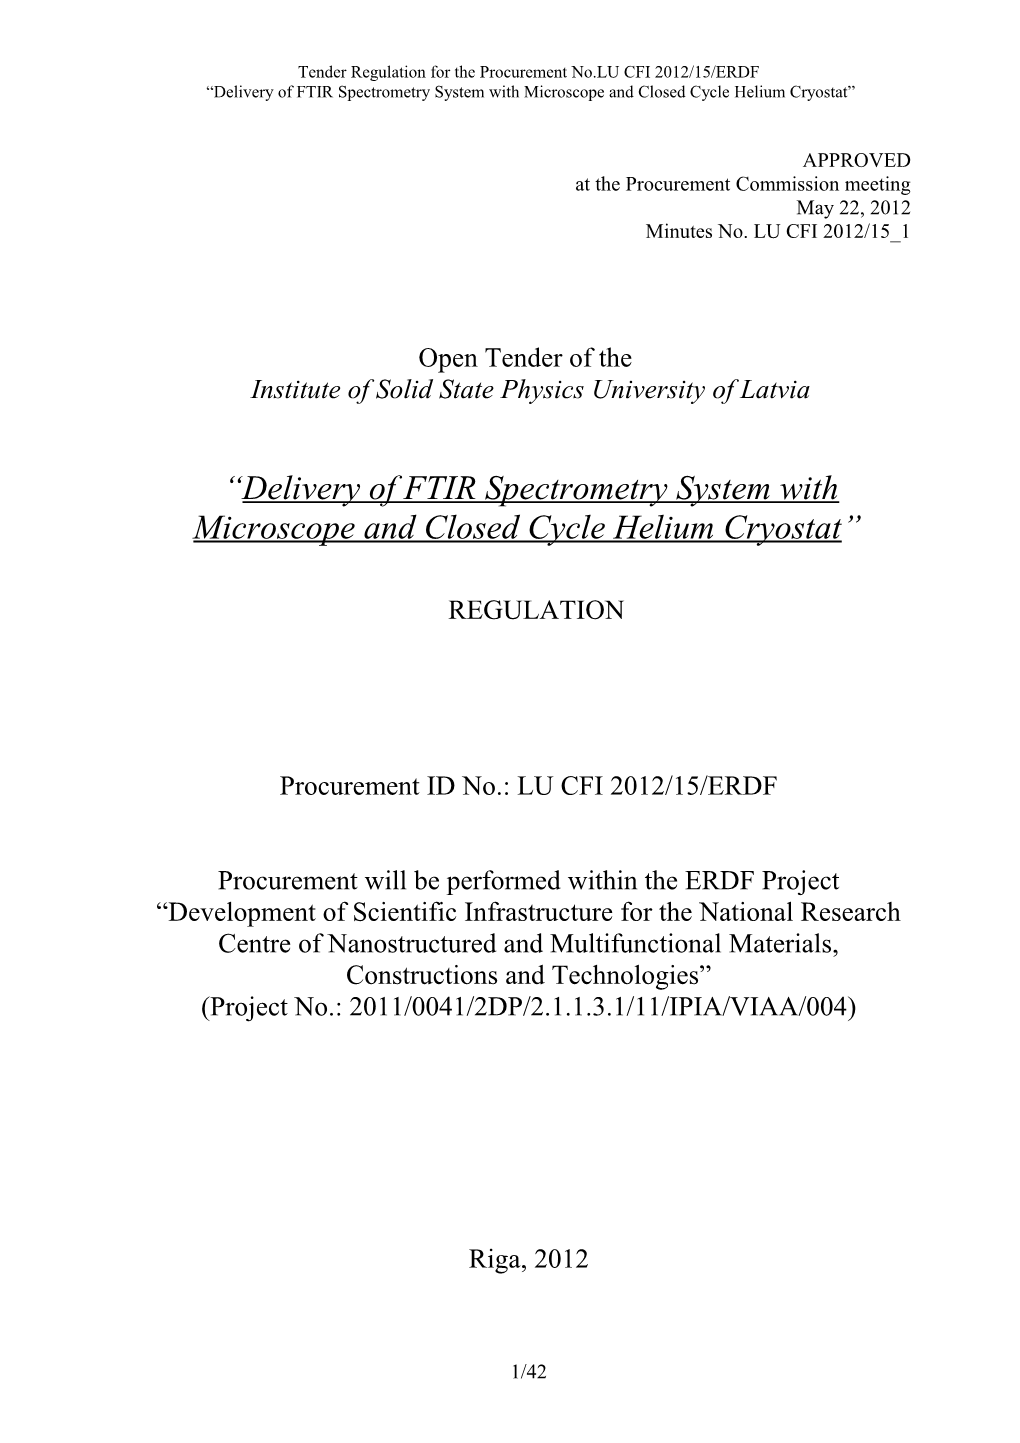 Tenderregulation for the Procurement No.LU CFI 2012/15/ERDF